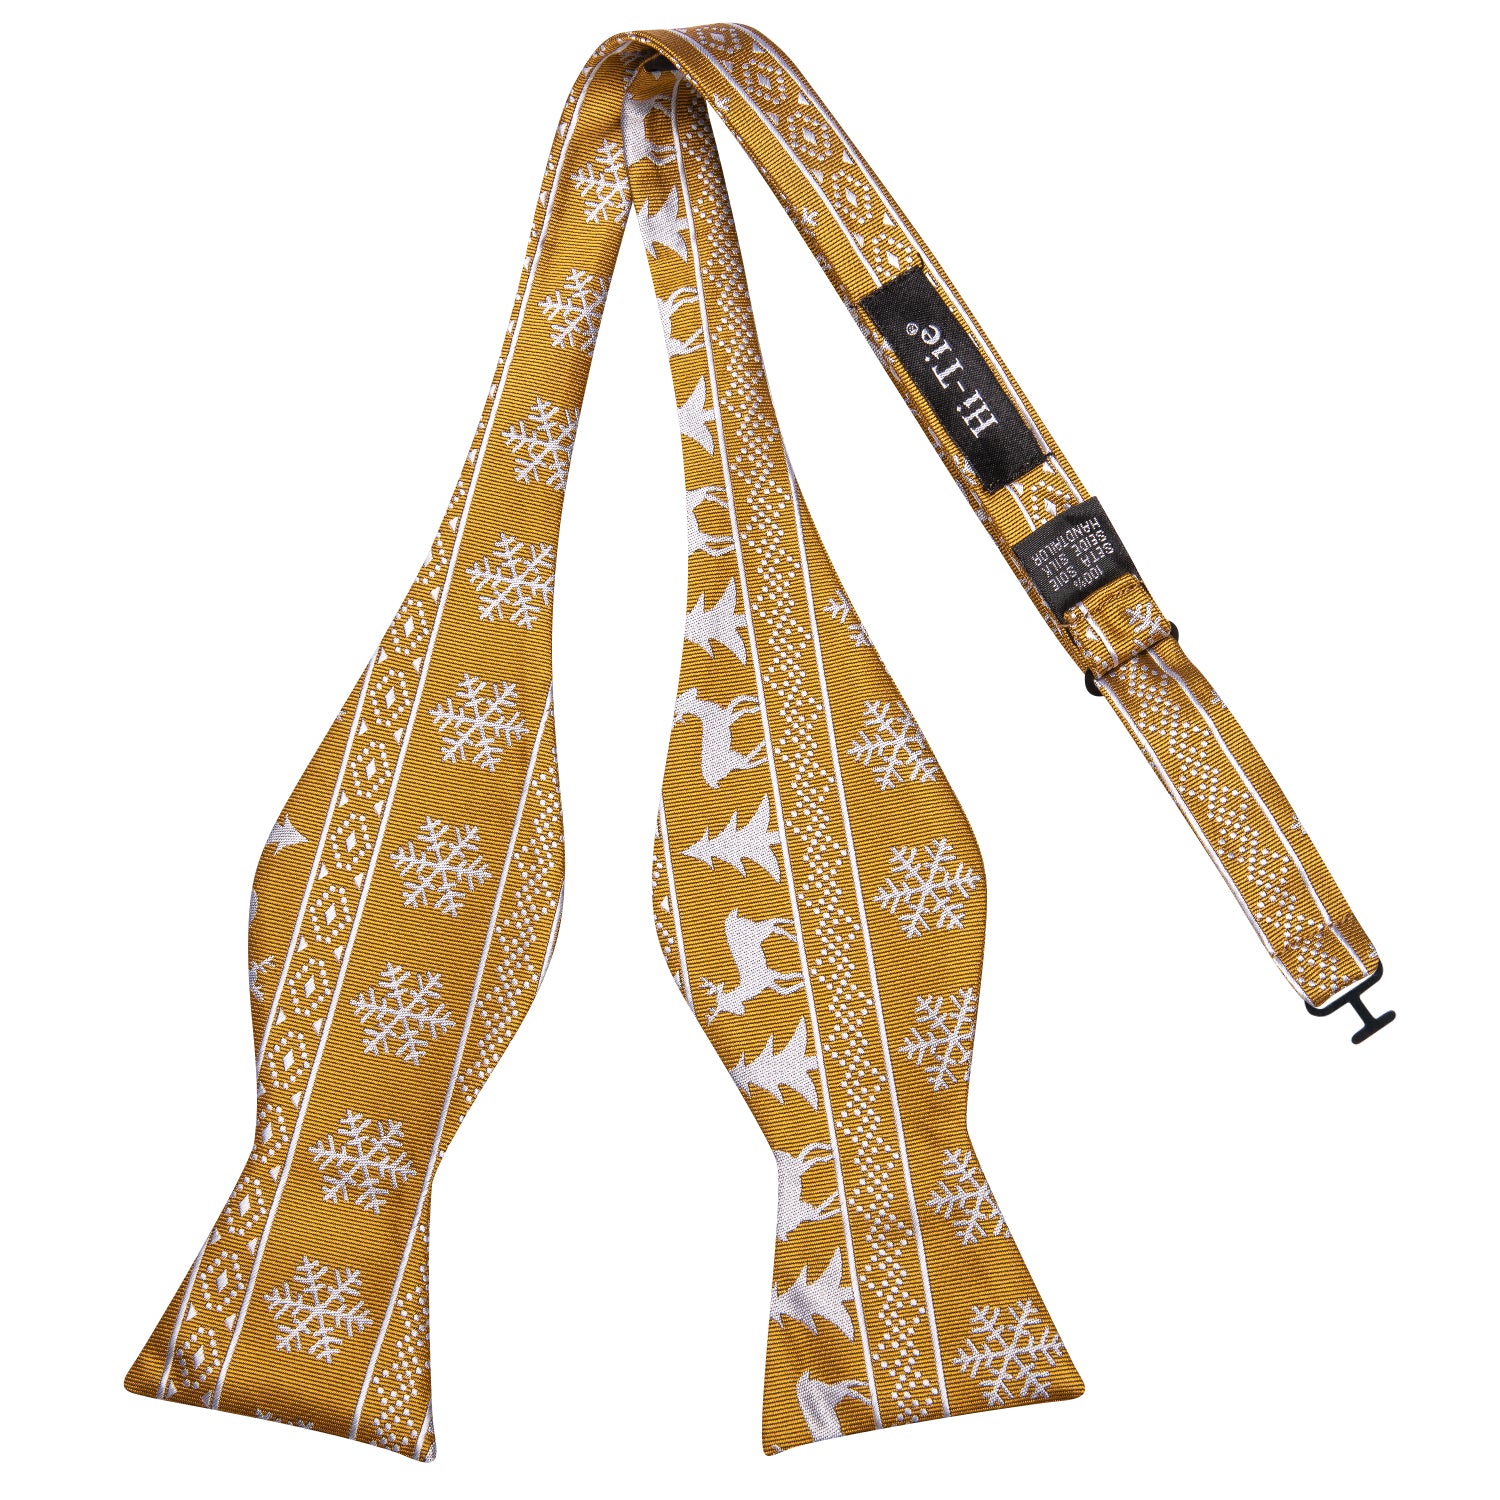 Gold White Christmas Deer Self-tied Bow Tie Hanky Cufflinks Set